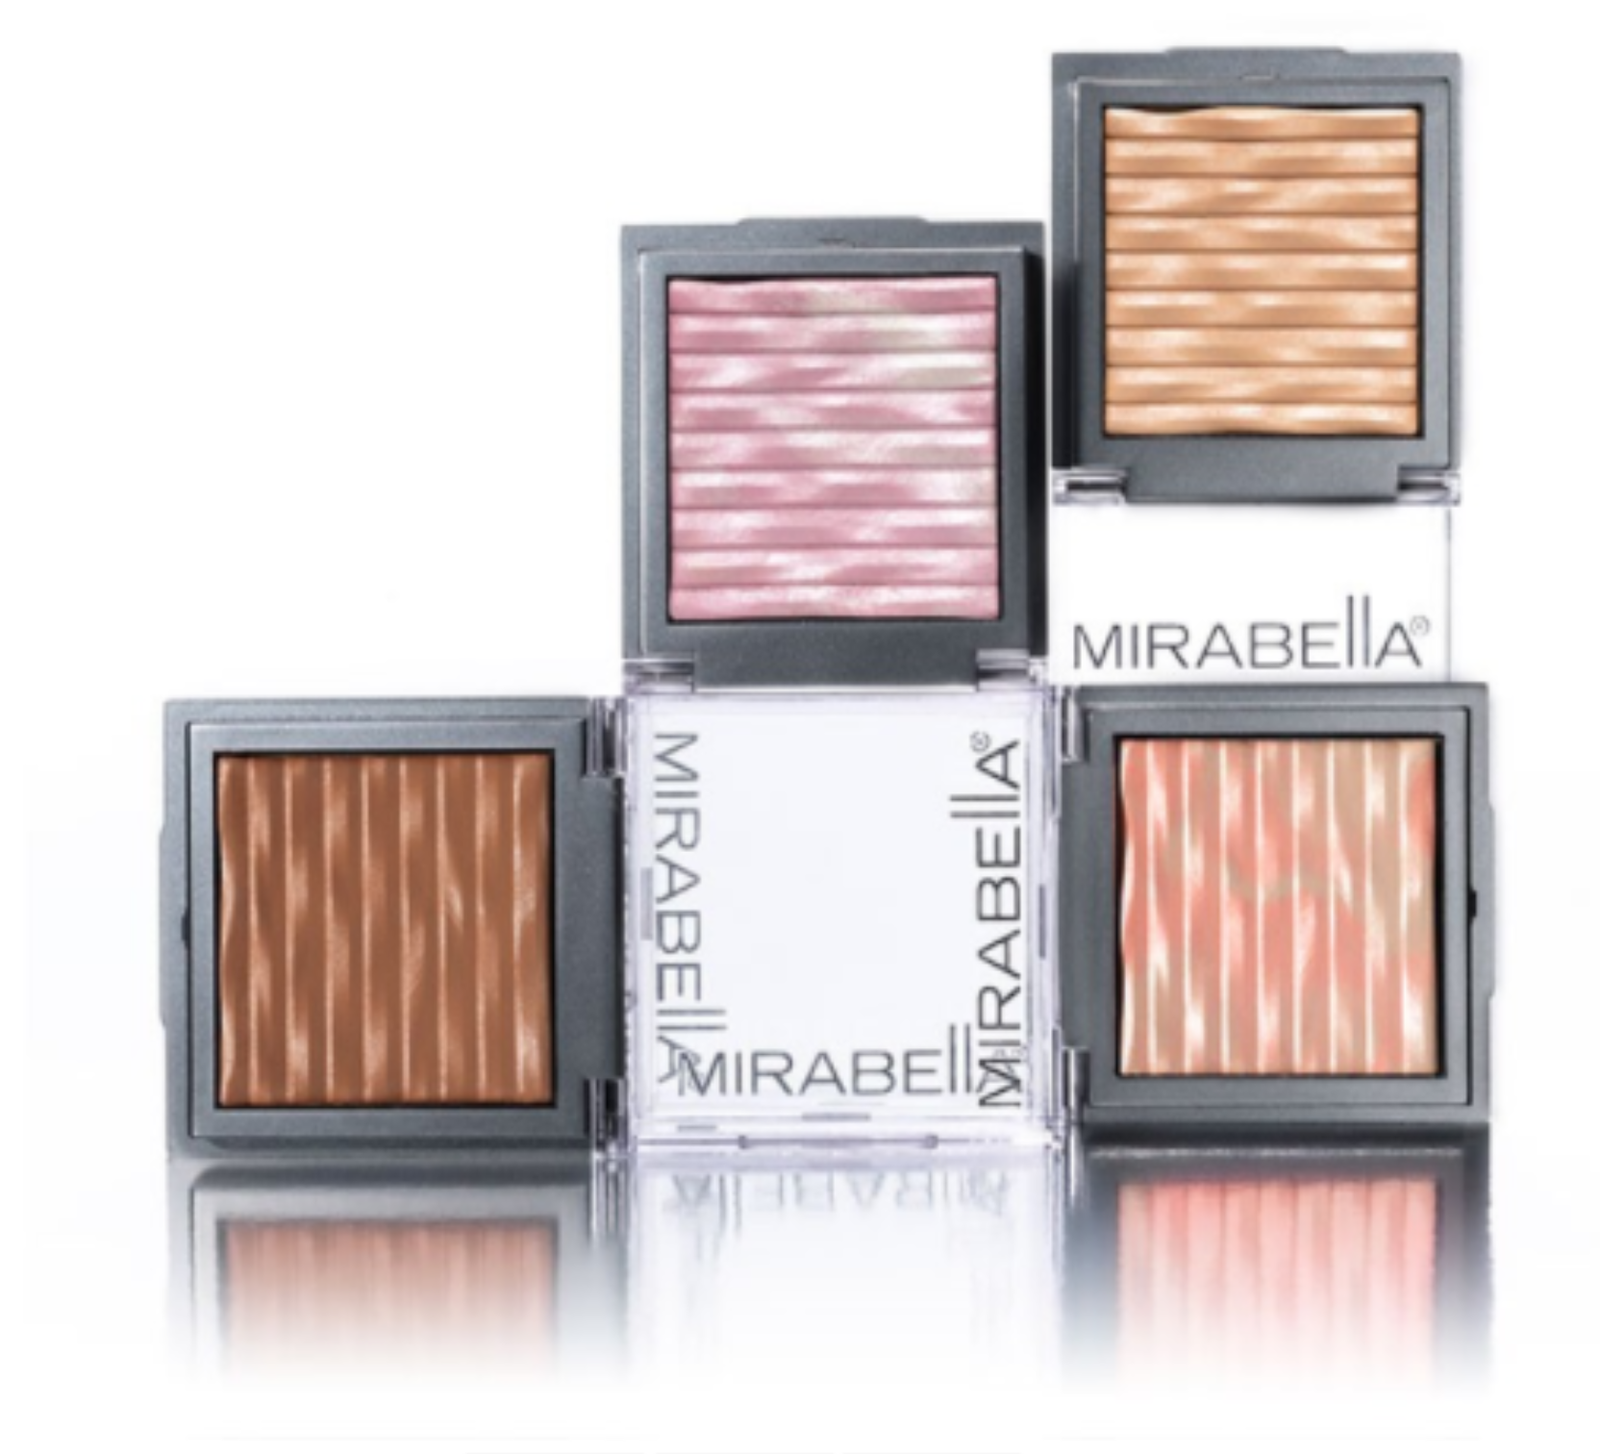 Mirabella Brilliant Prismatech Shimmer Mineral Highlighter (Retail $44.00) - $16.00